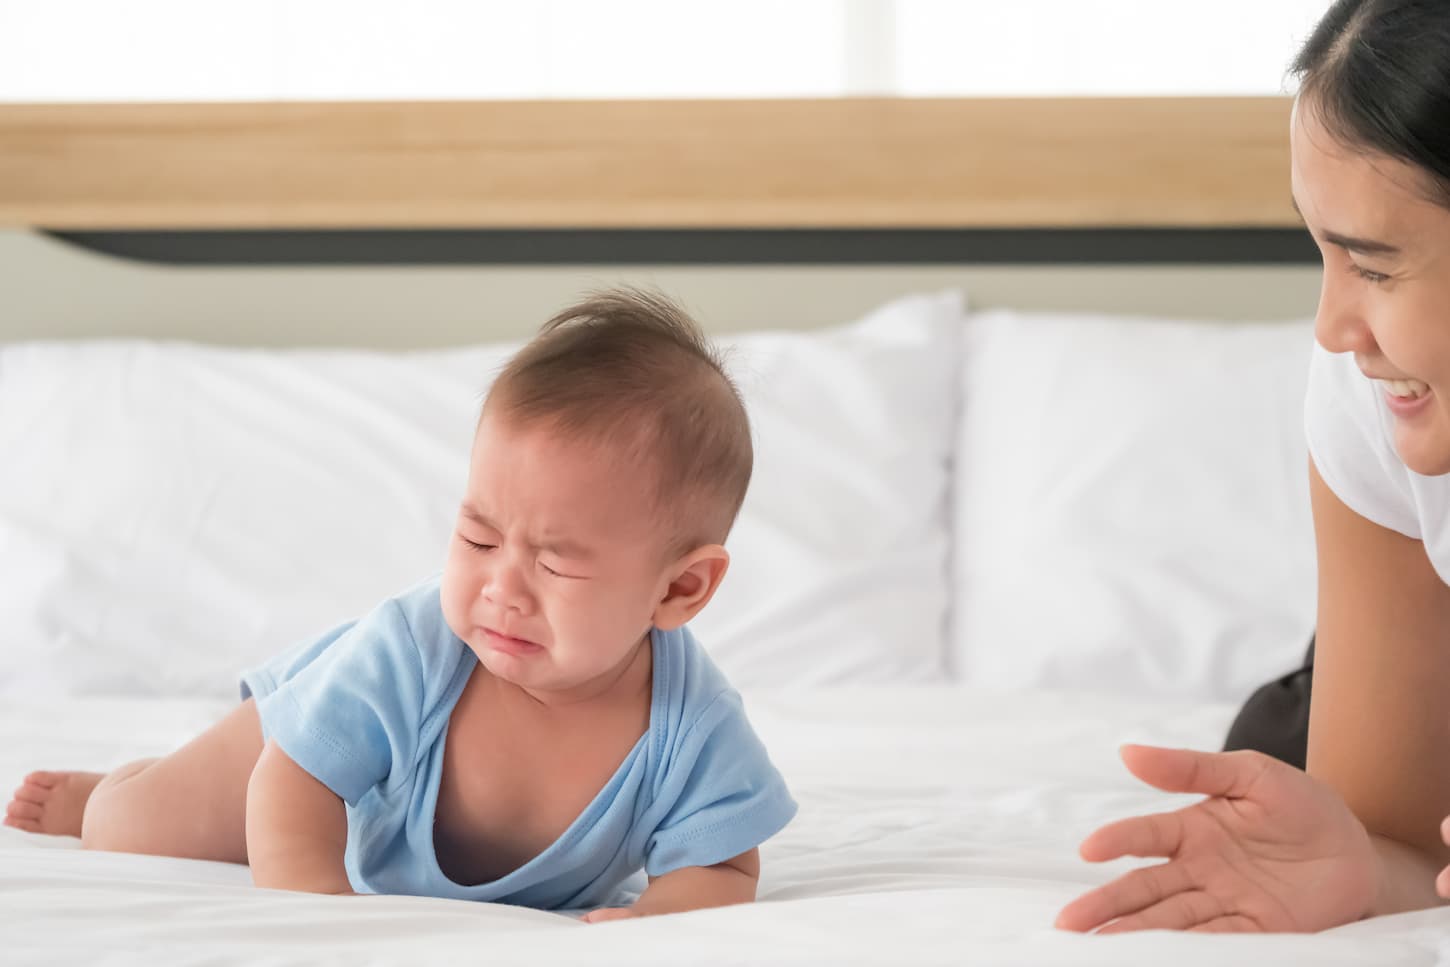 Does Sleep Training Change A Baby’s Demeanor?